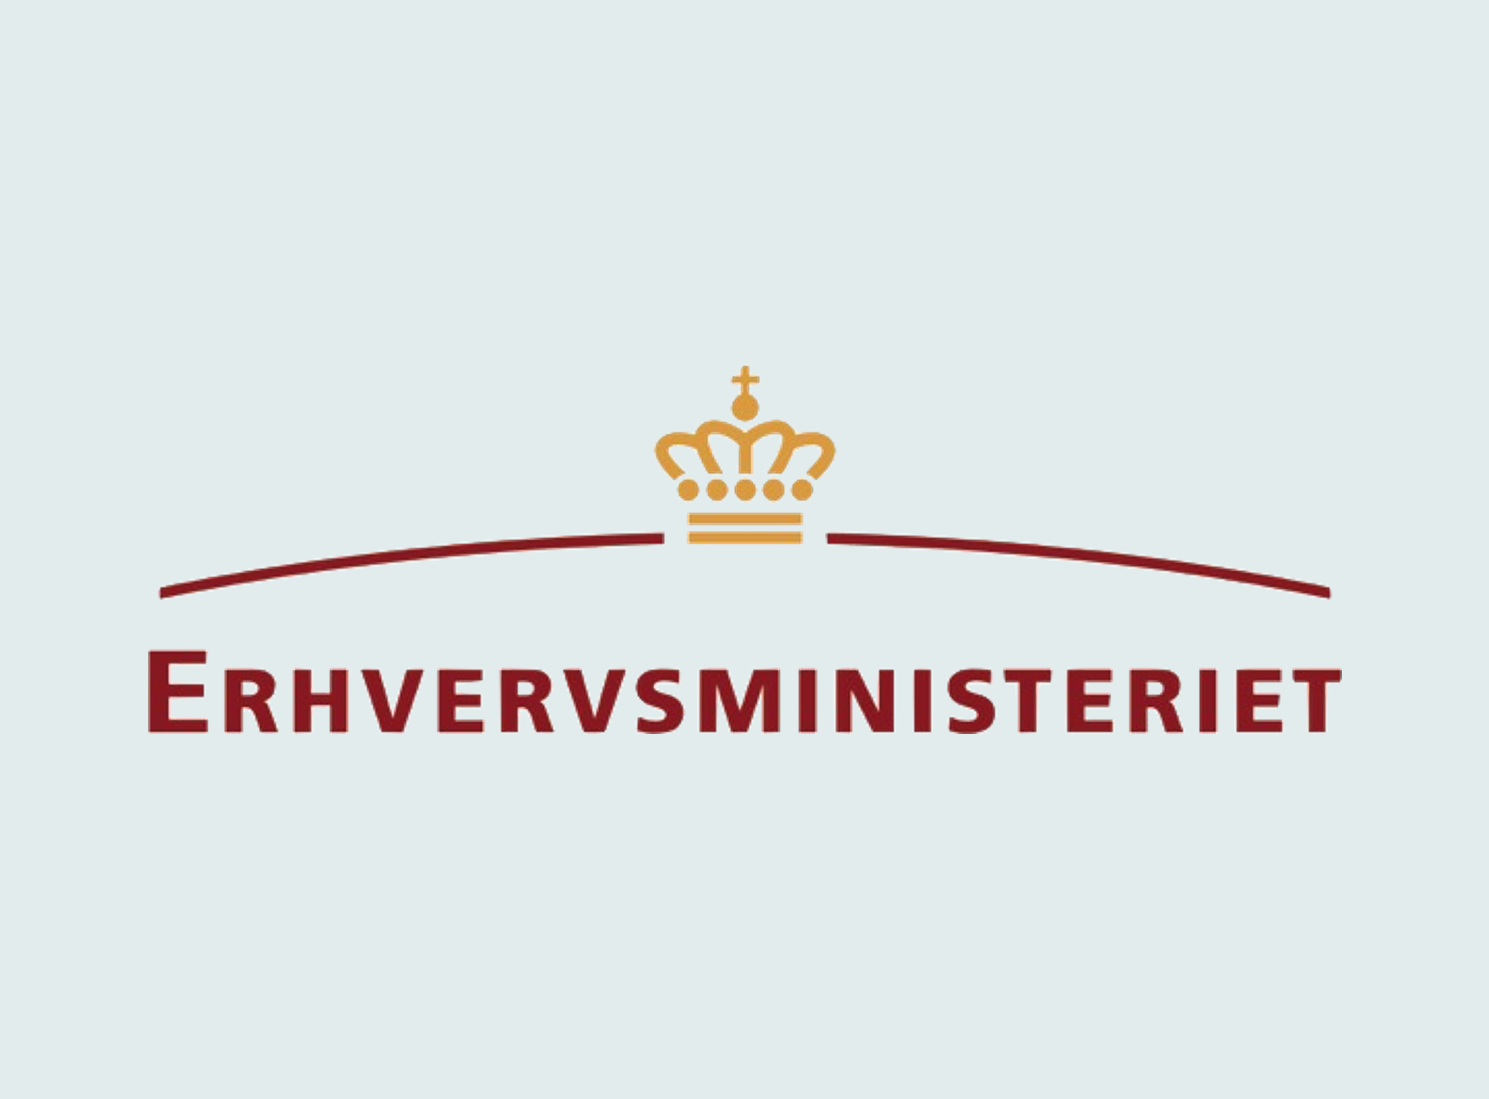 Erhvervsministeriet logo